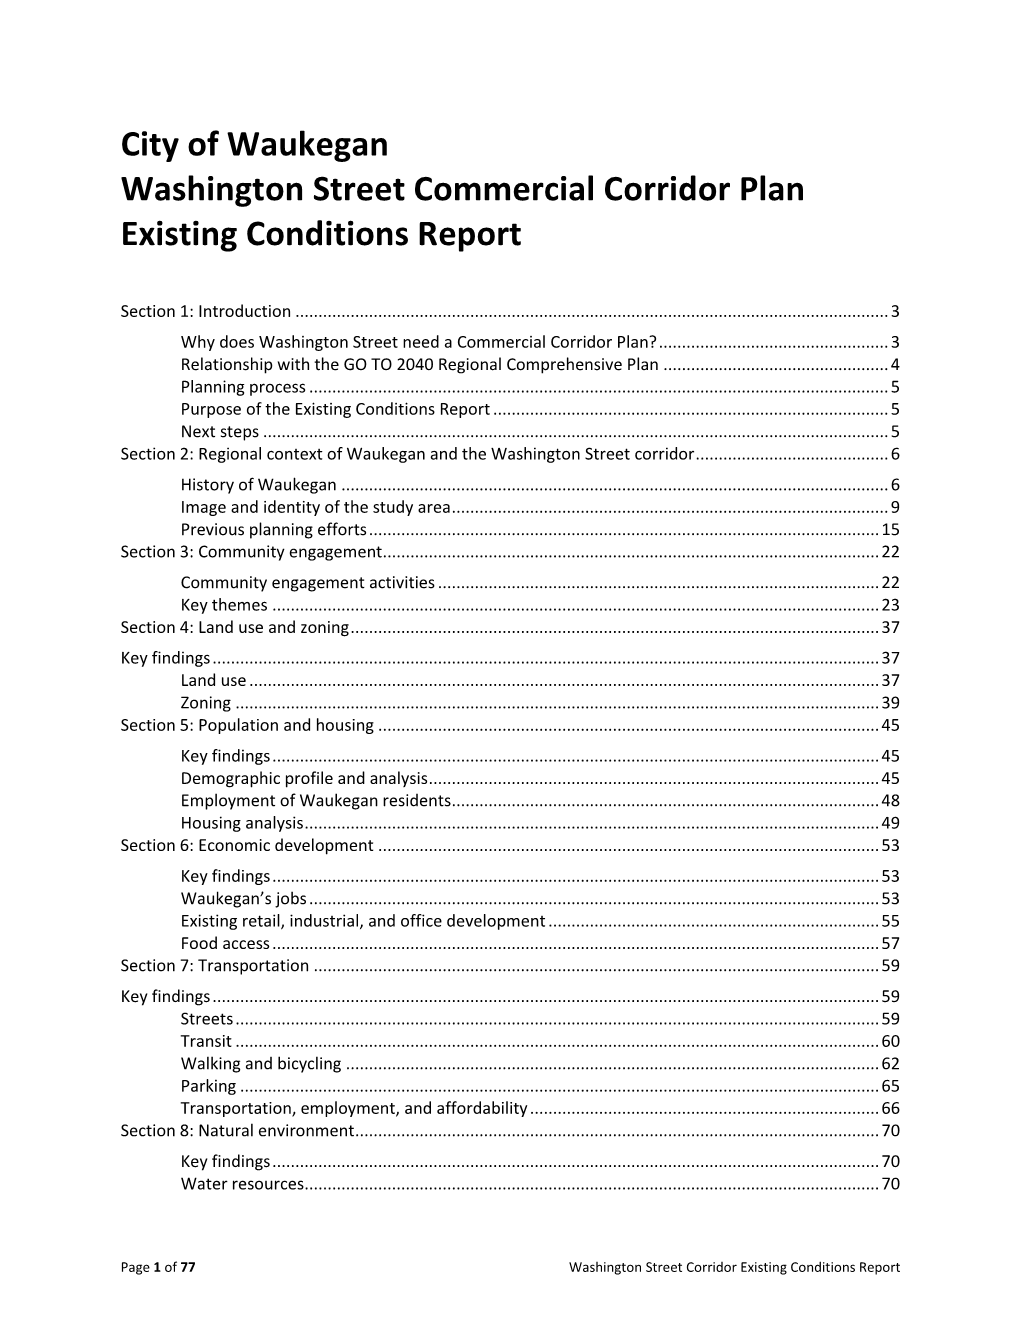 City of Waukegan Washington Street Commercial Corridor Plan Existing Conditions Report